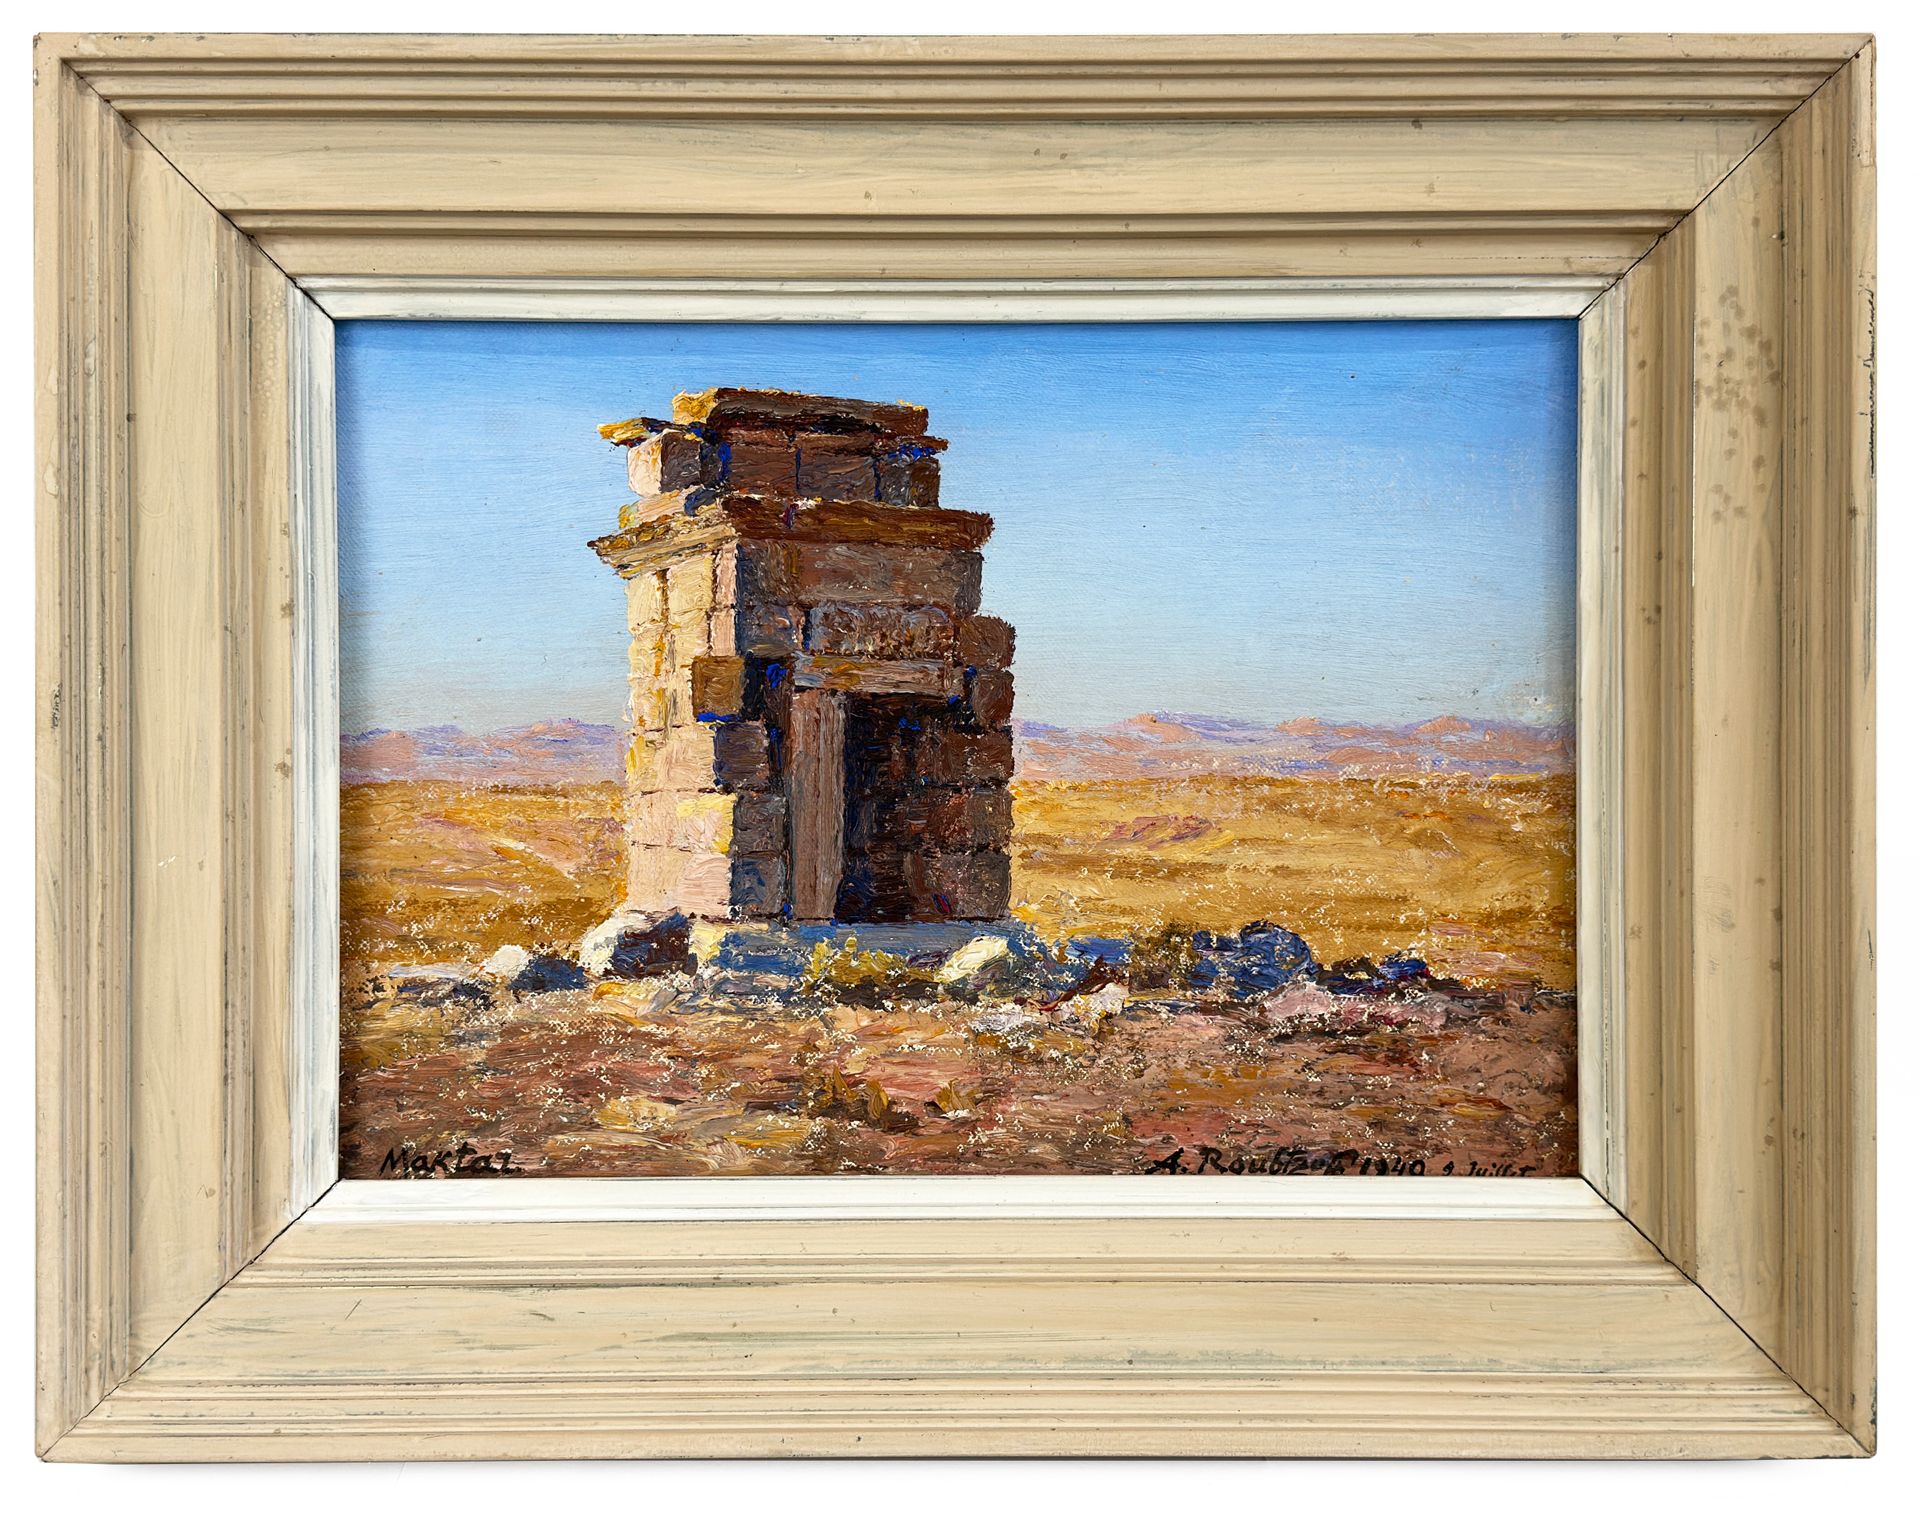 Null Alexandre ROUBTZOFF (Saint-Pétersbourg, 1884 - Tunis, 1949)
Les ruines roma&hellip;